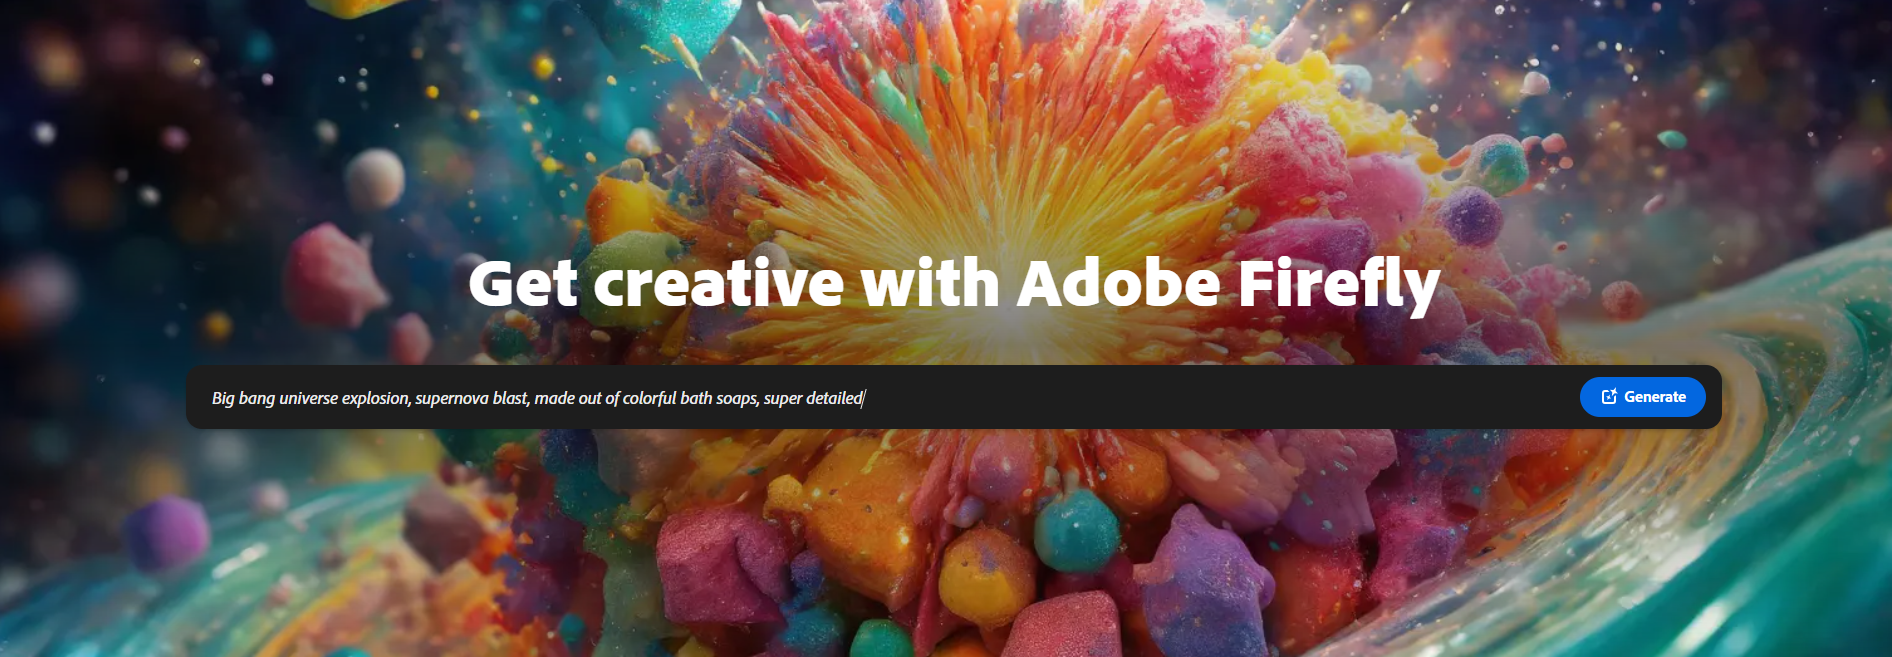 Adobe Firefly Homepage